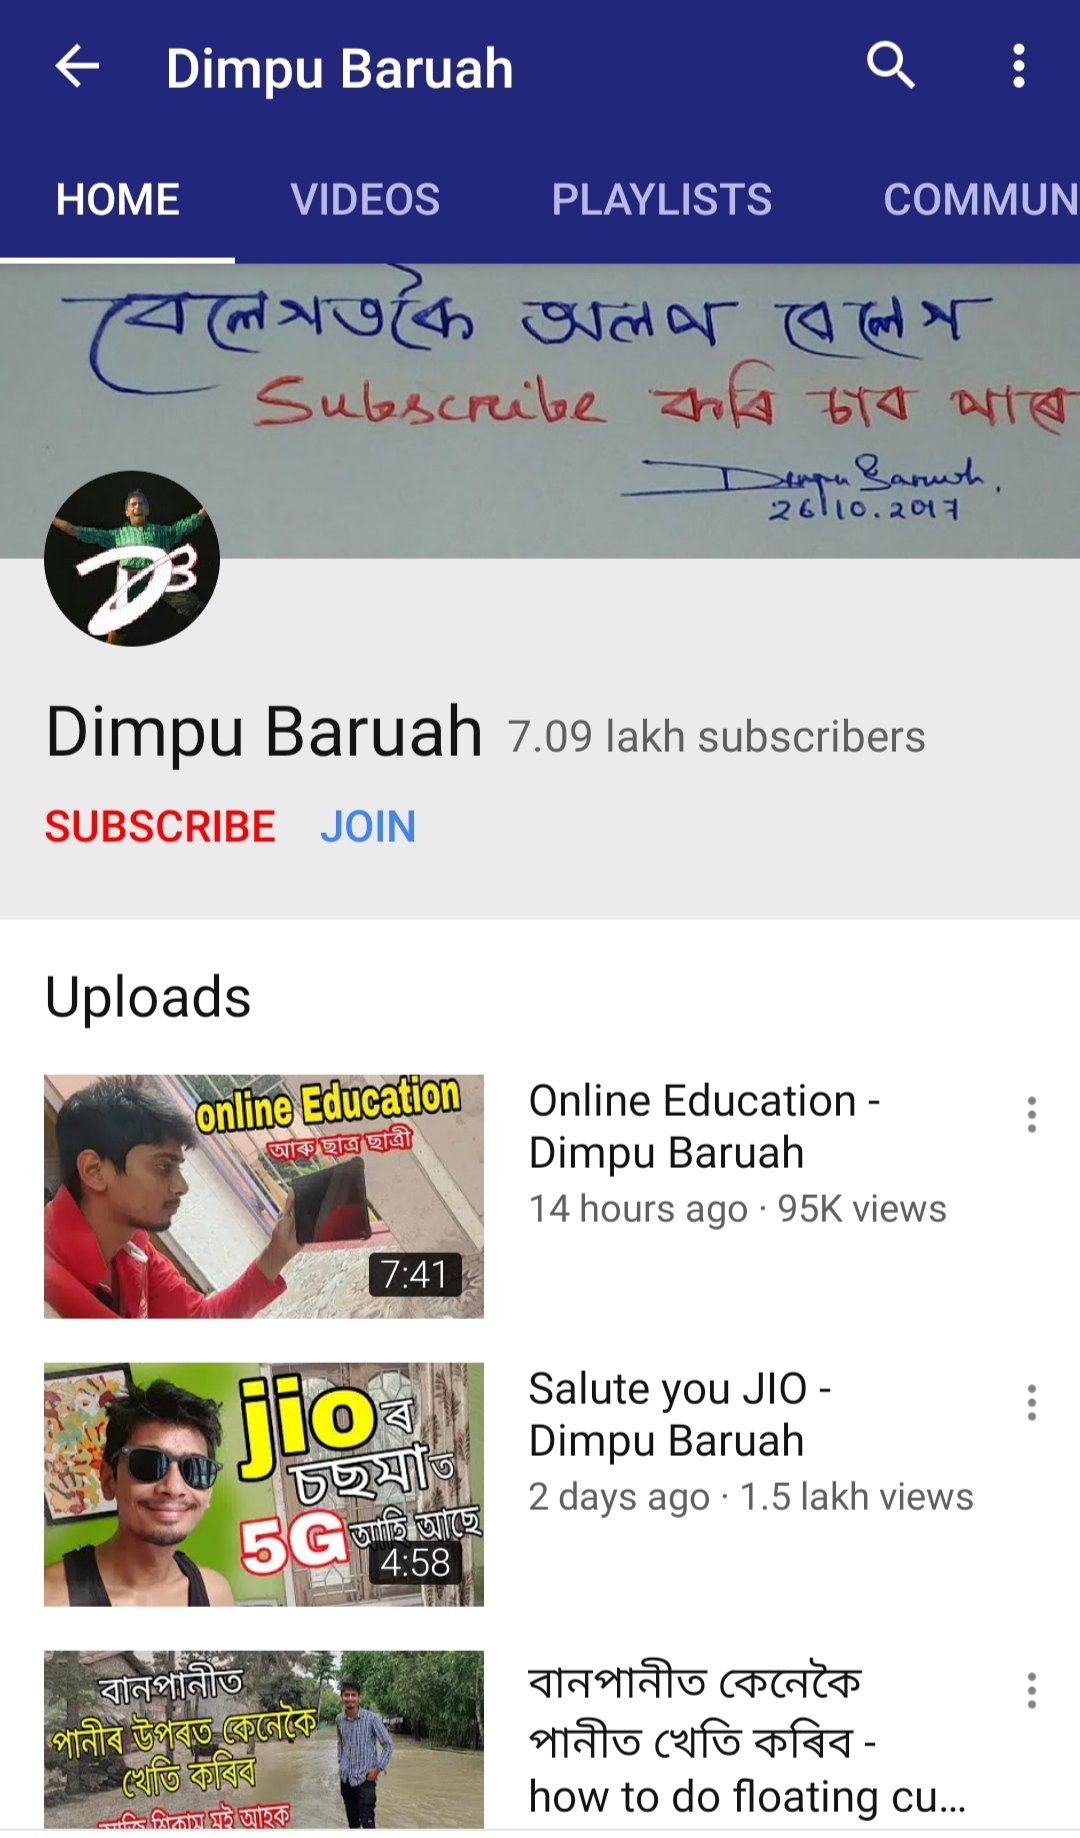 Assam Youtuber Dimpu Baruah raises money for flood victims via LiveStream